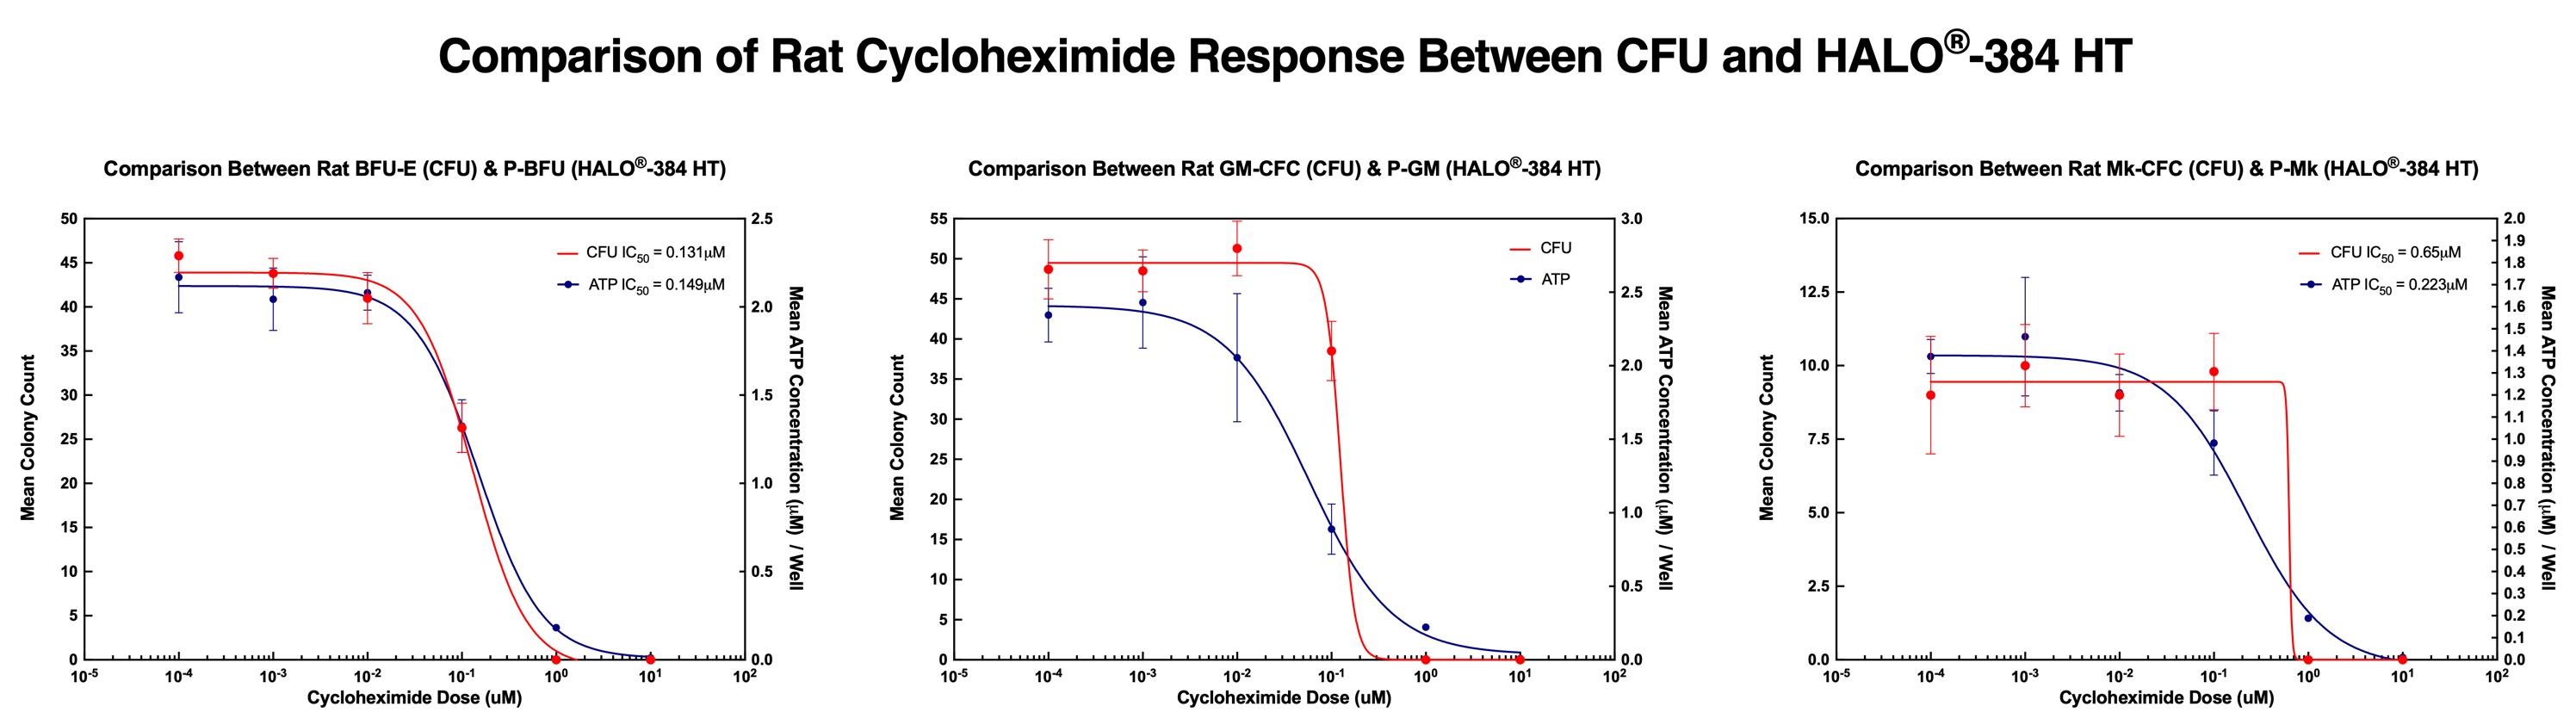 Comparison of CFU and HALO-384 HT Cycloheximide Response for Rat Bone Marrow